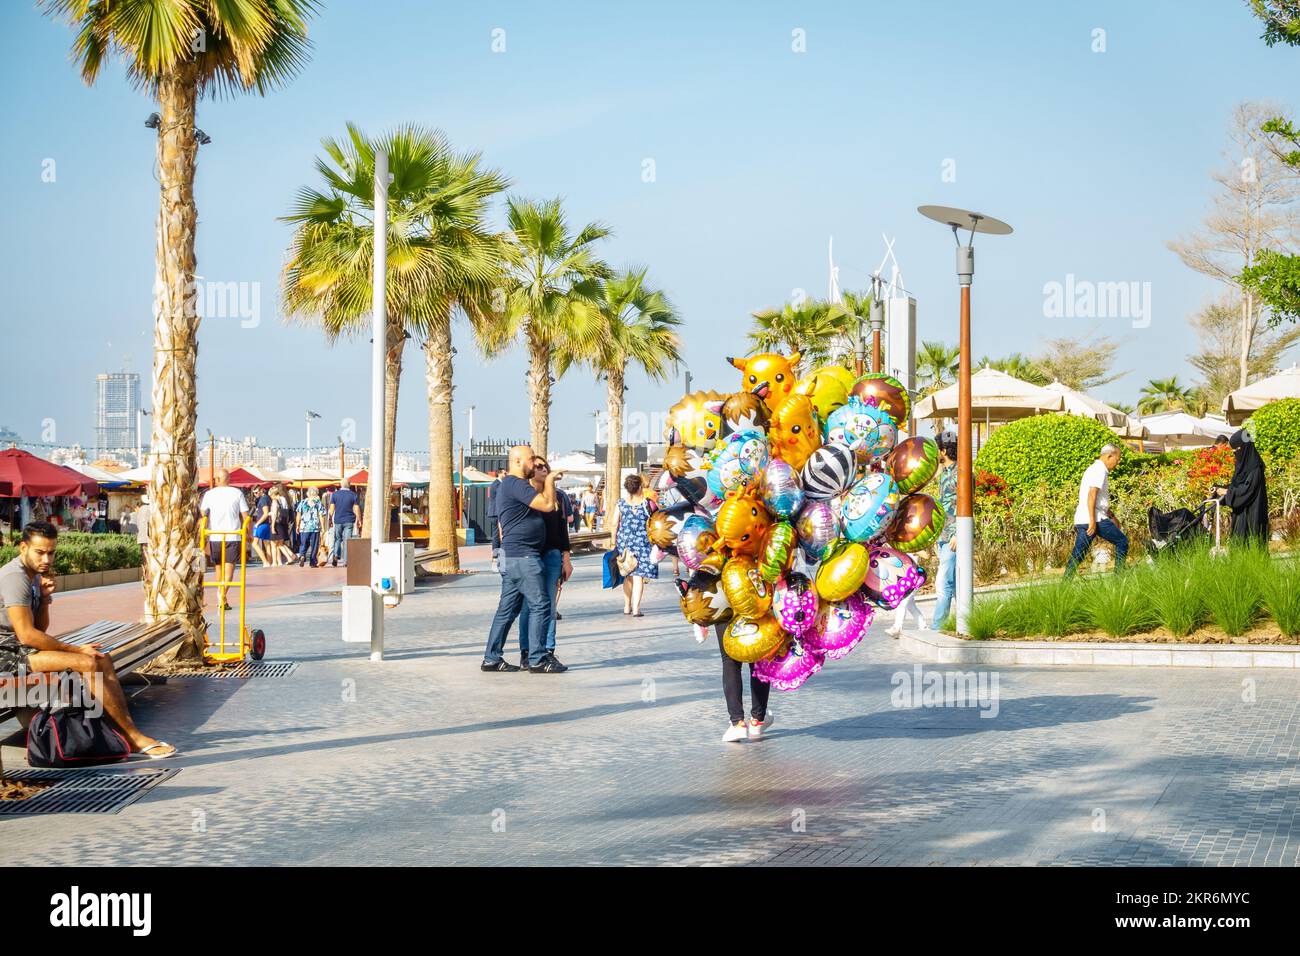 Dubai, UAE, February 23, 2018: A party balloon vendor at the Jumeirah Beach Residence (JBR) Walk - a polular destination for food, shopping and entert Stock Photo